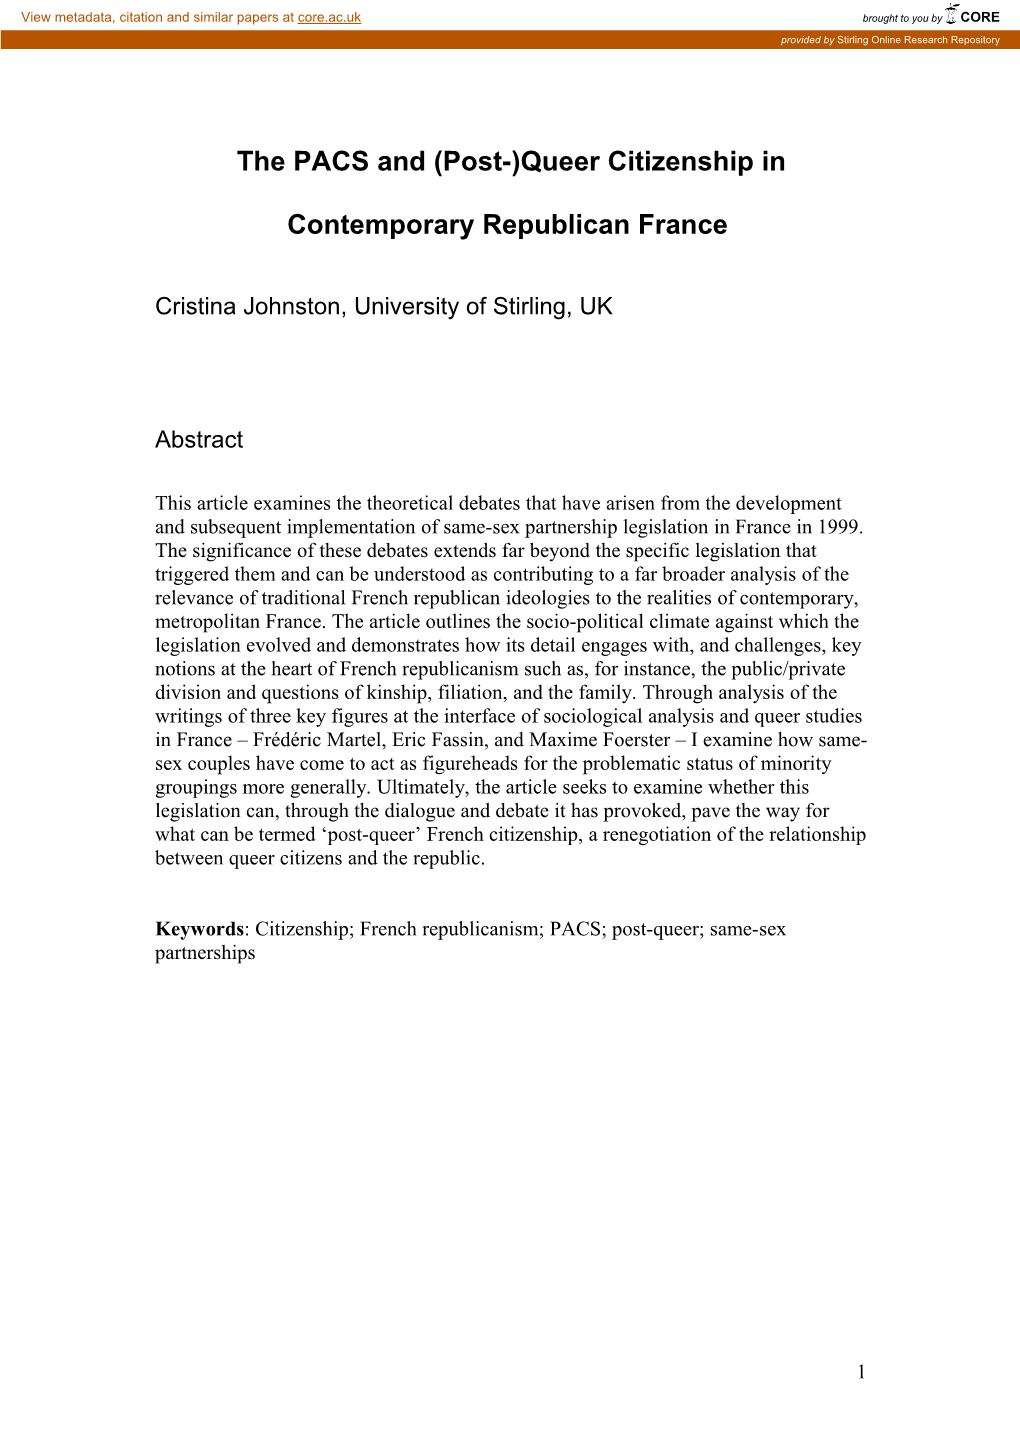 Queer Citizenship in Contemporary Republican France